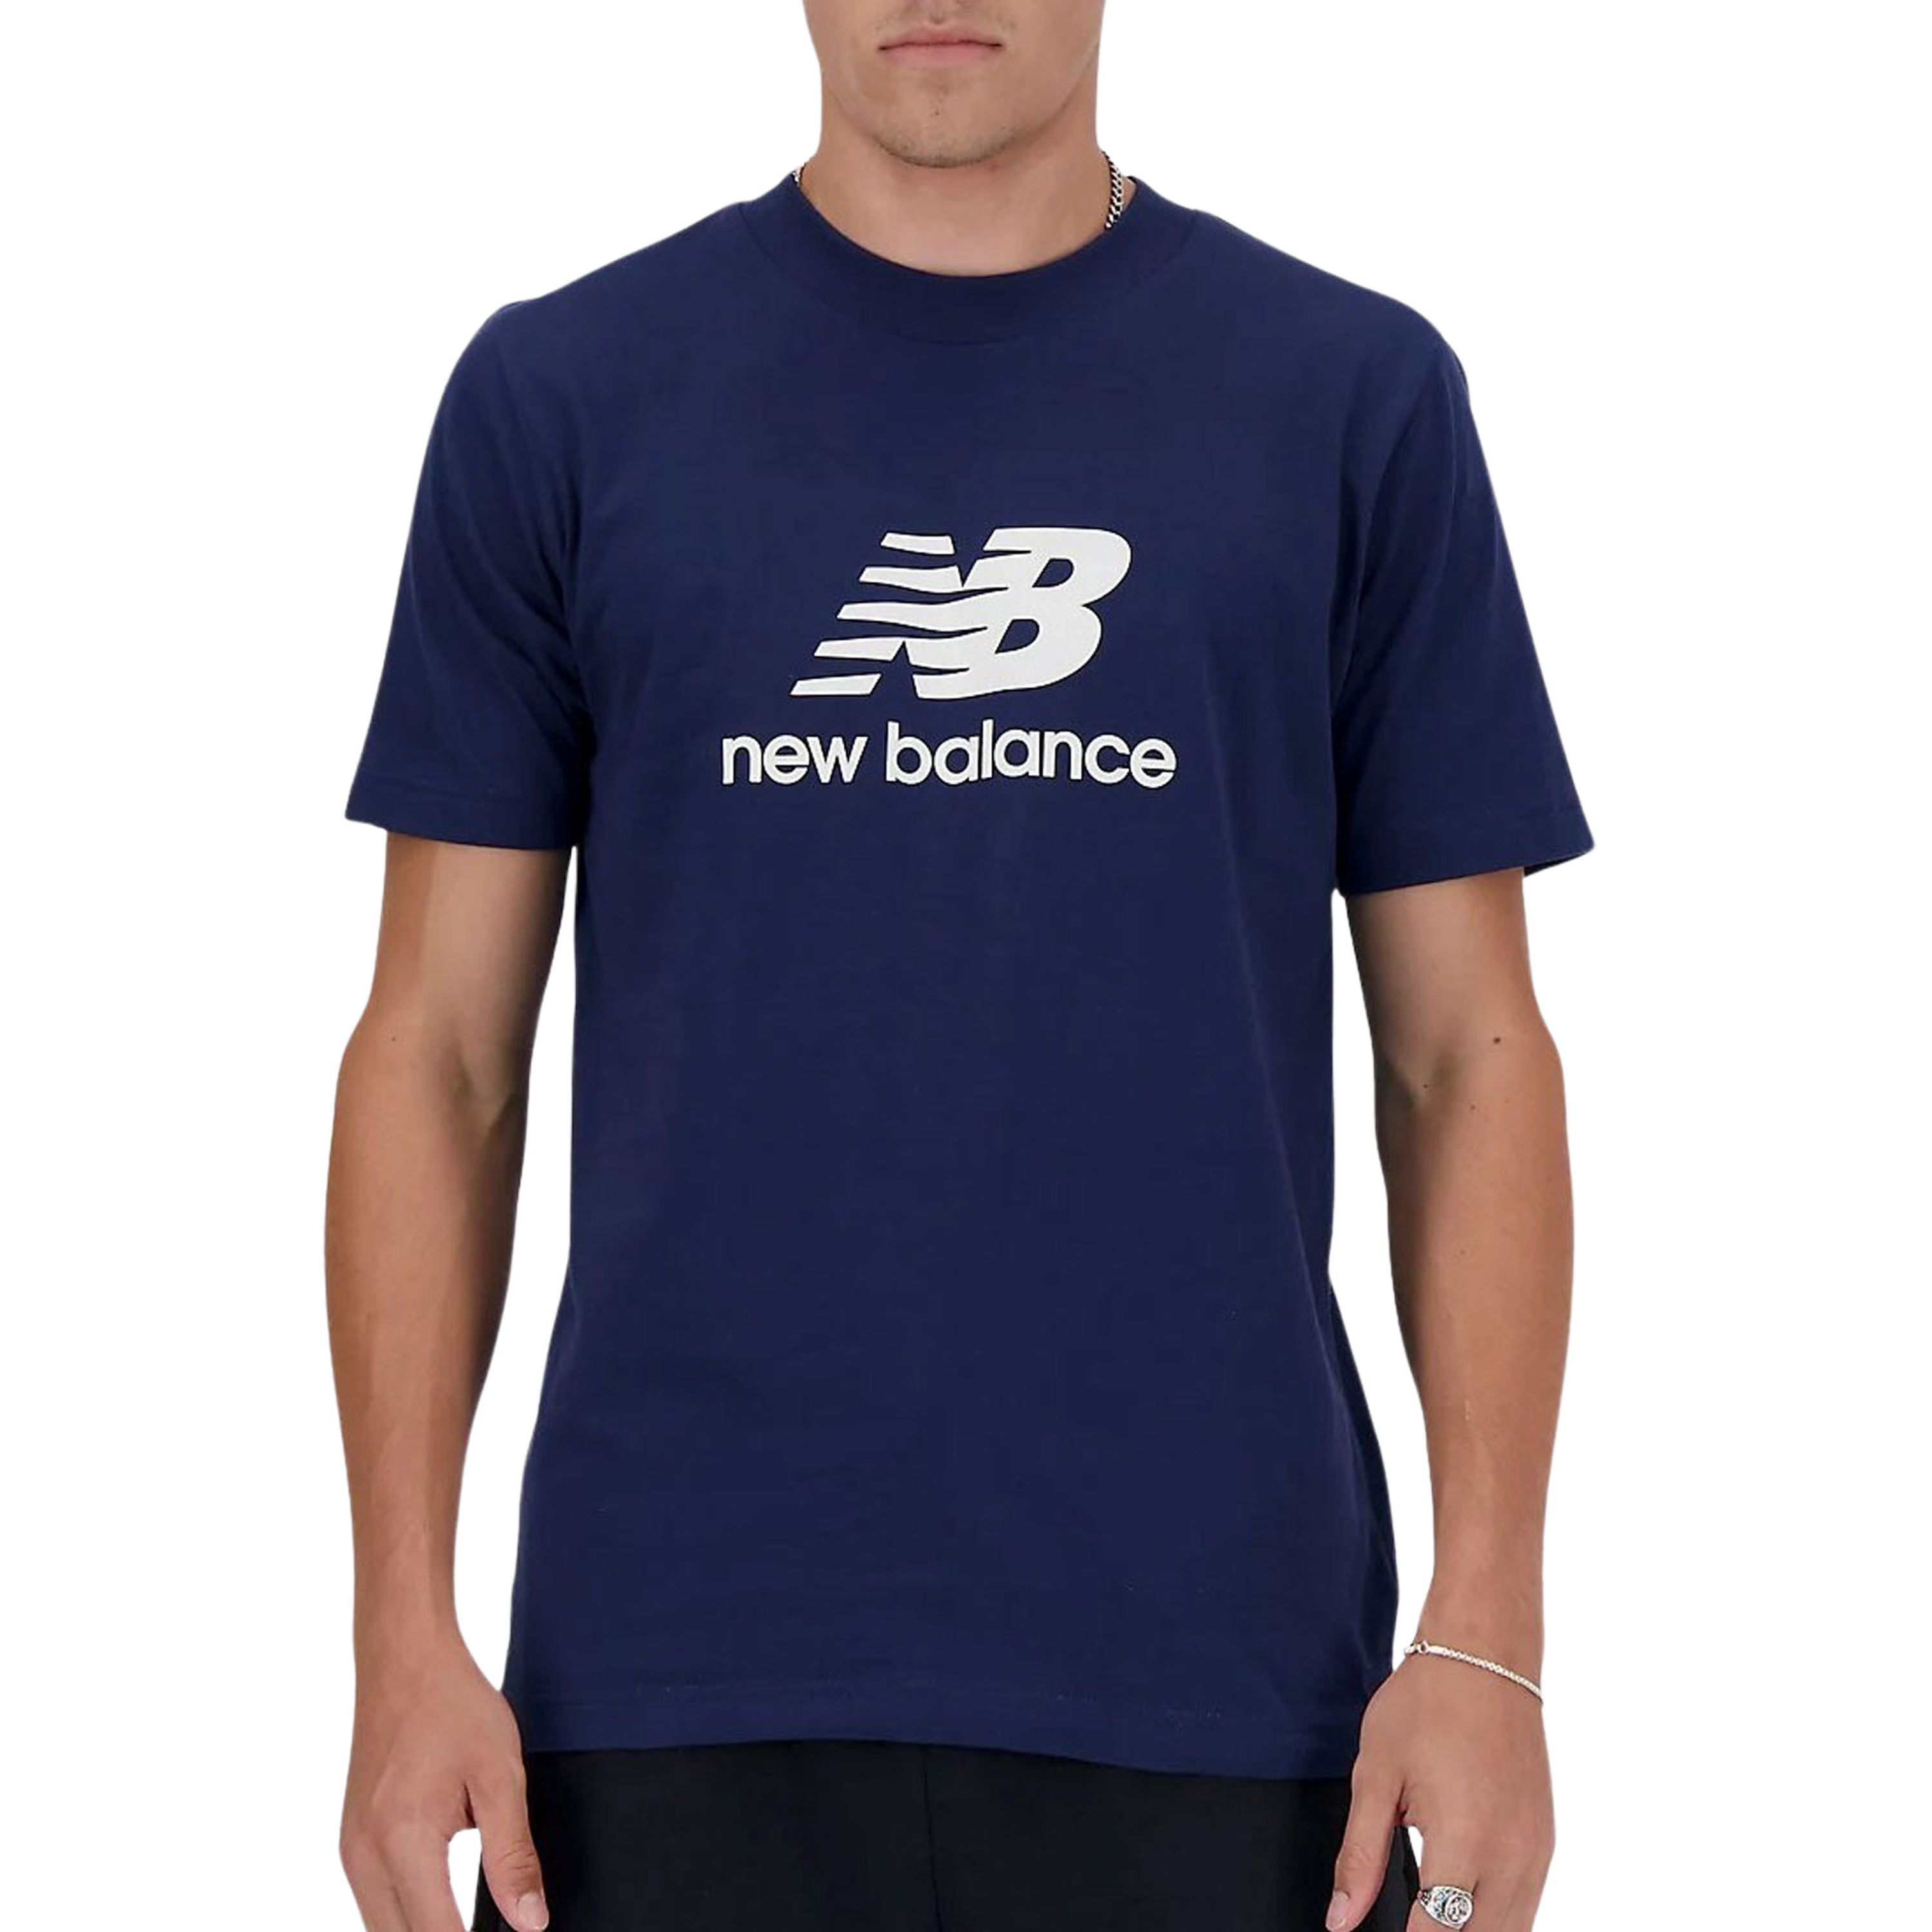 New Balance Small Logo Shirt Heren